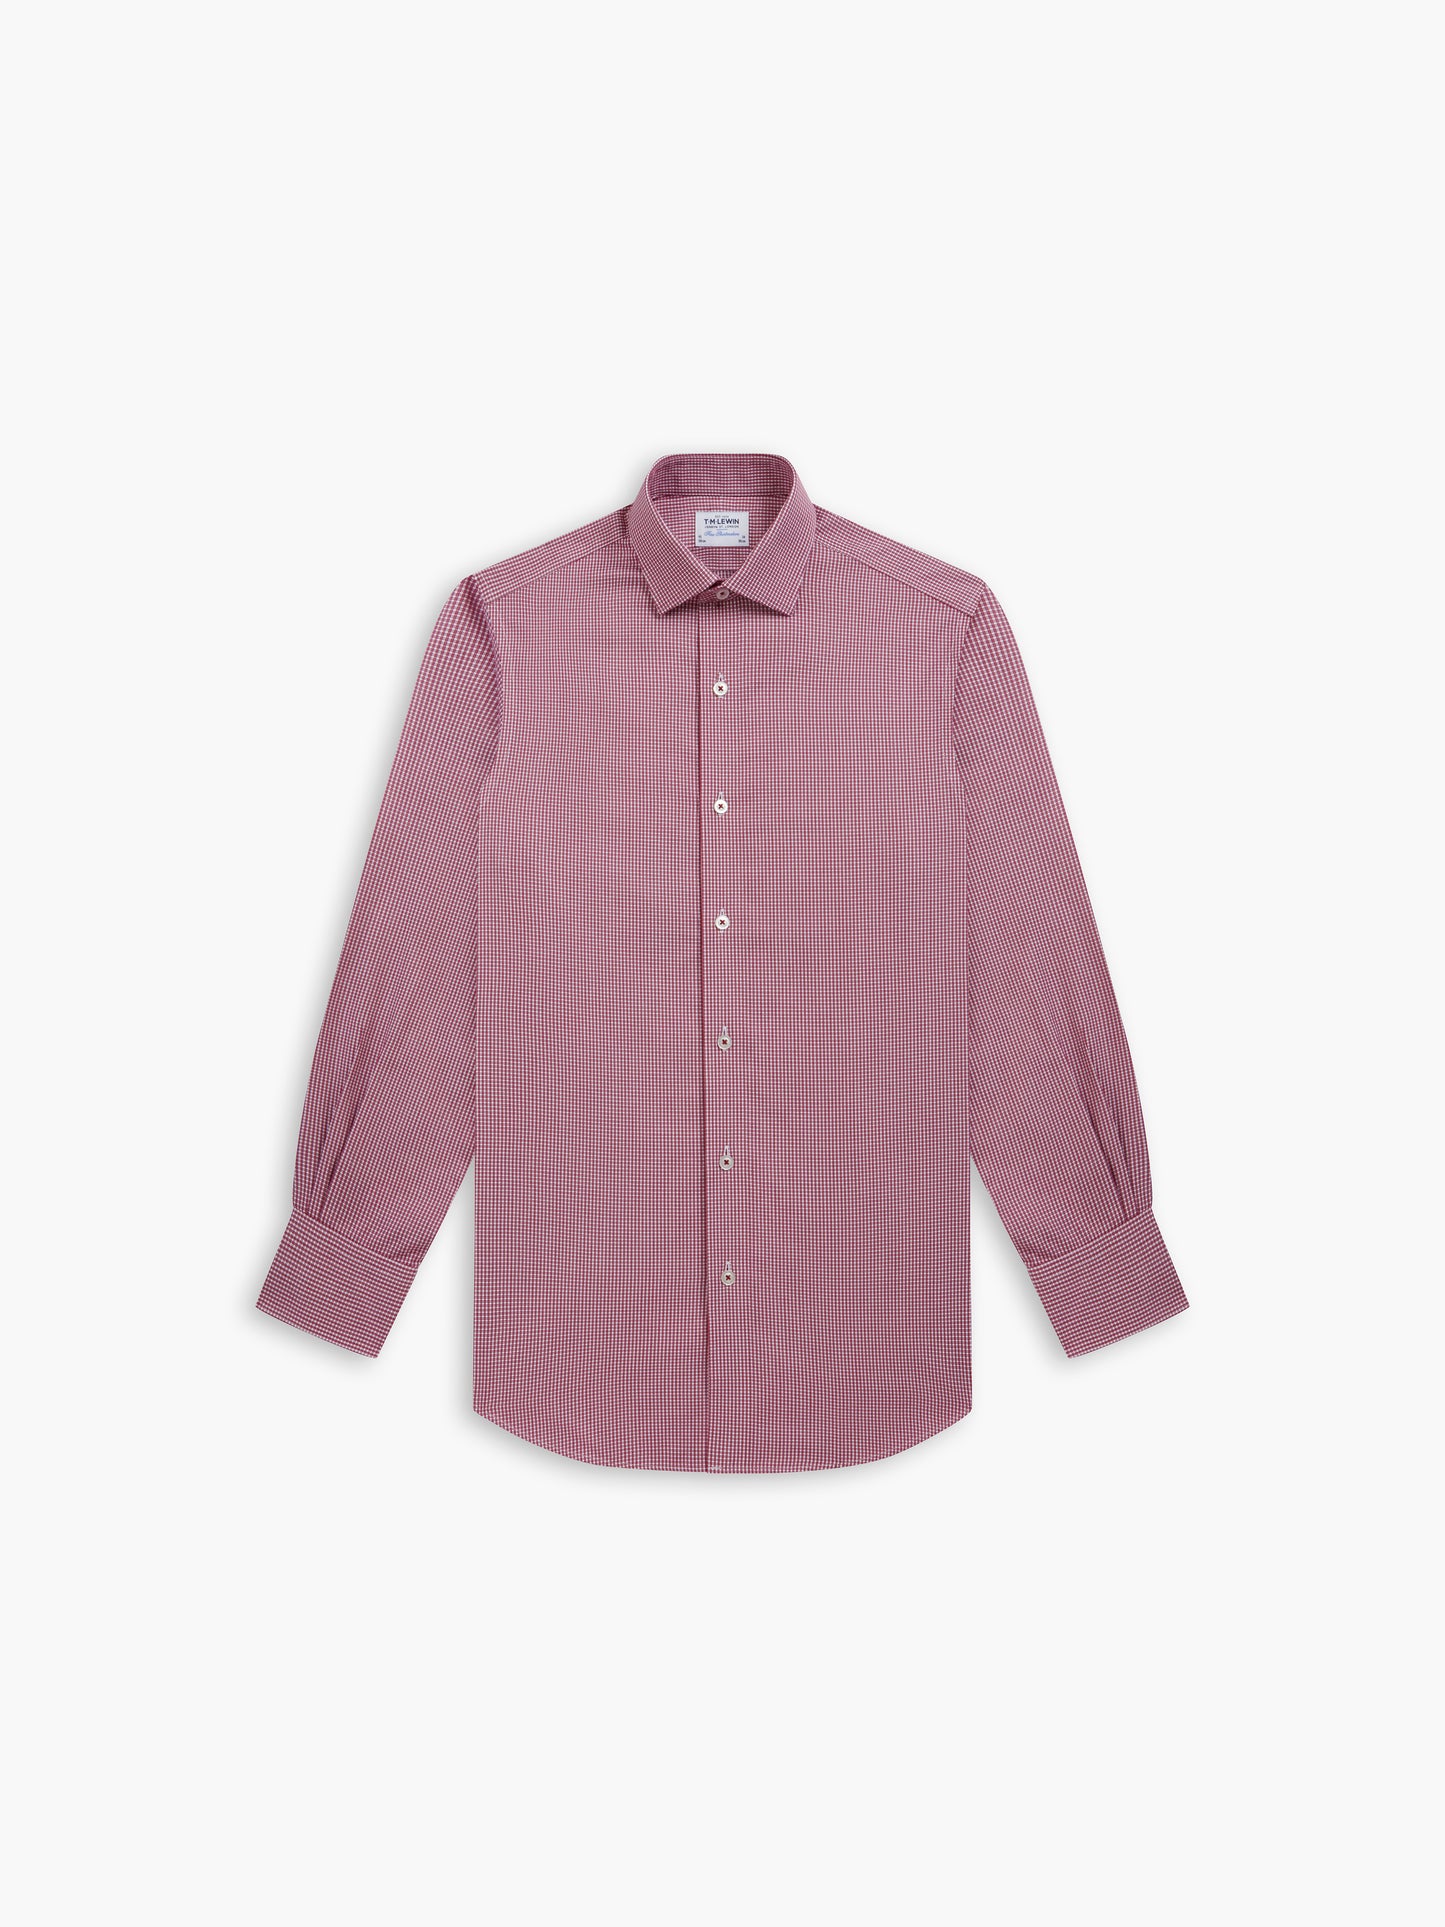 Non-Iron Burgundy Mini Plaid Check Plain Weave Regular Fit Single Cuff Classic Collar Shirt